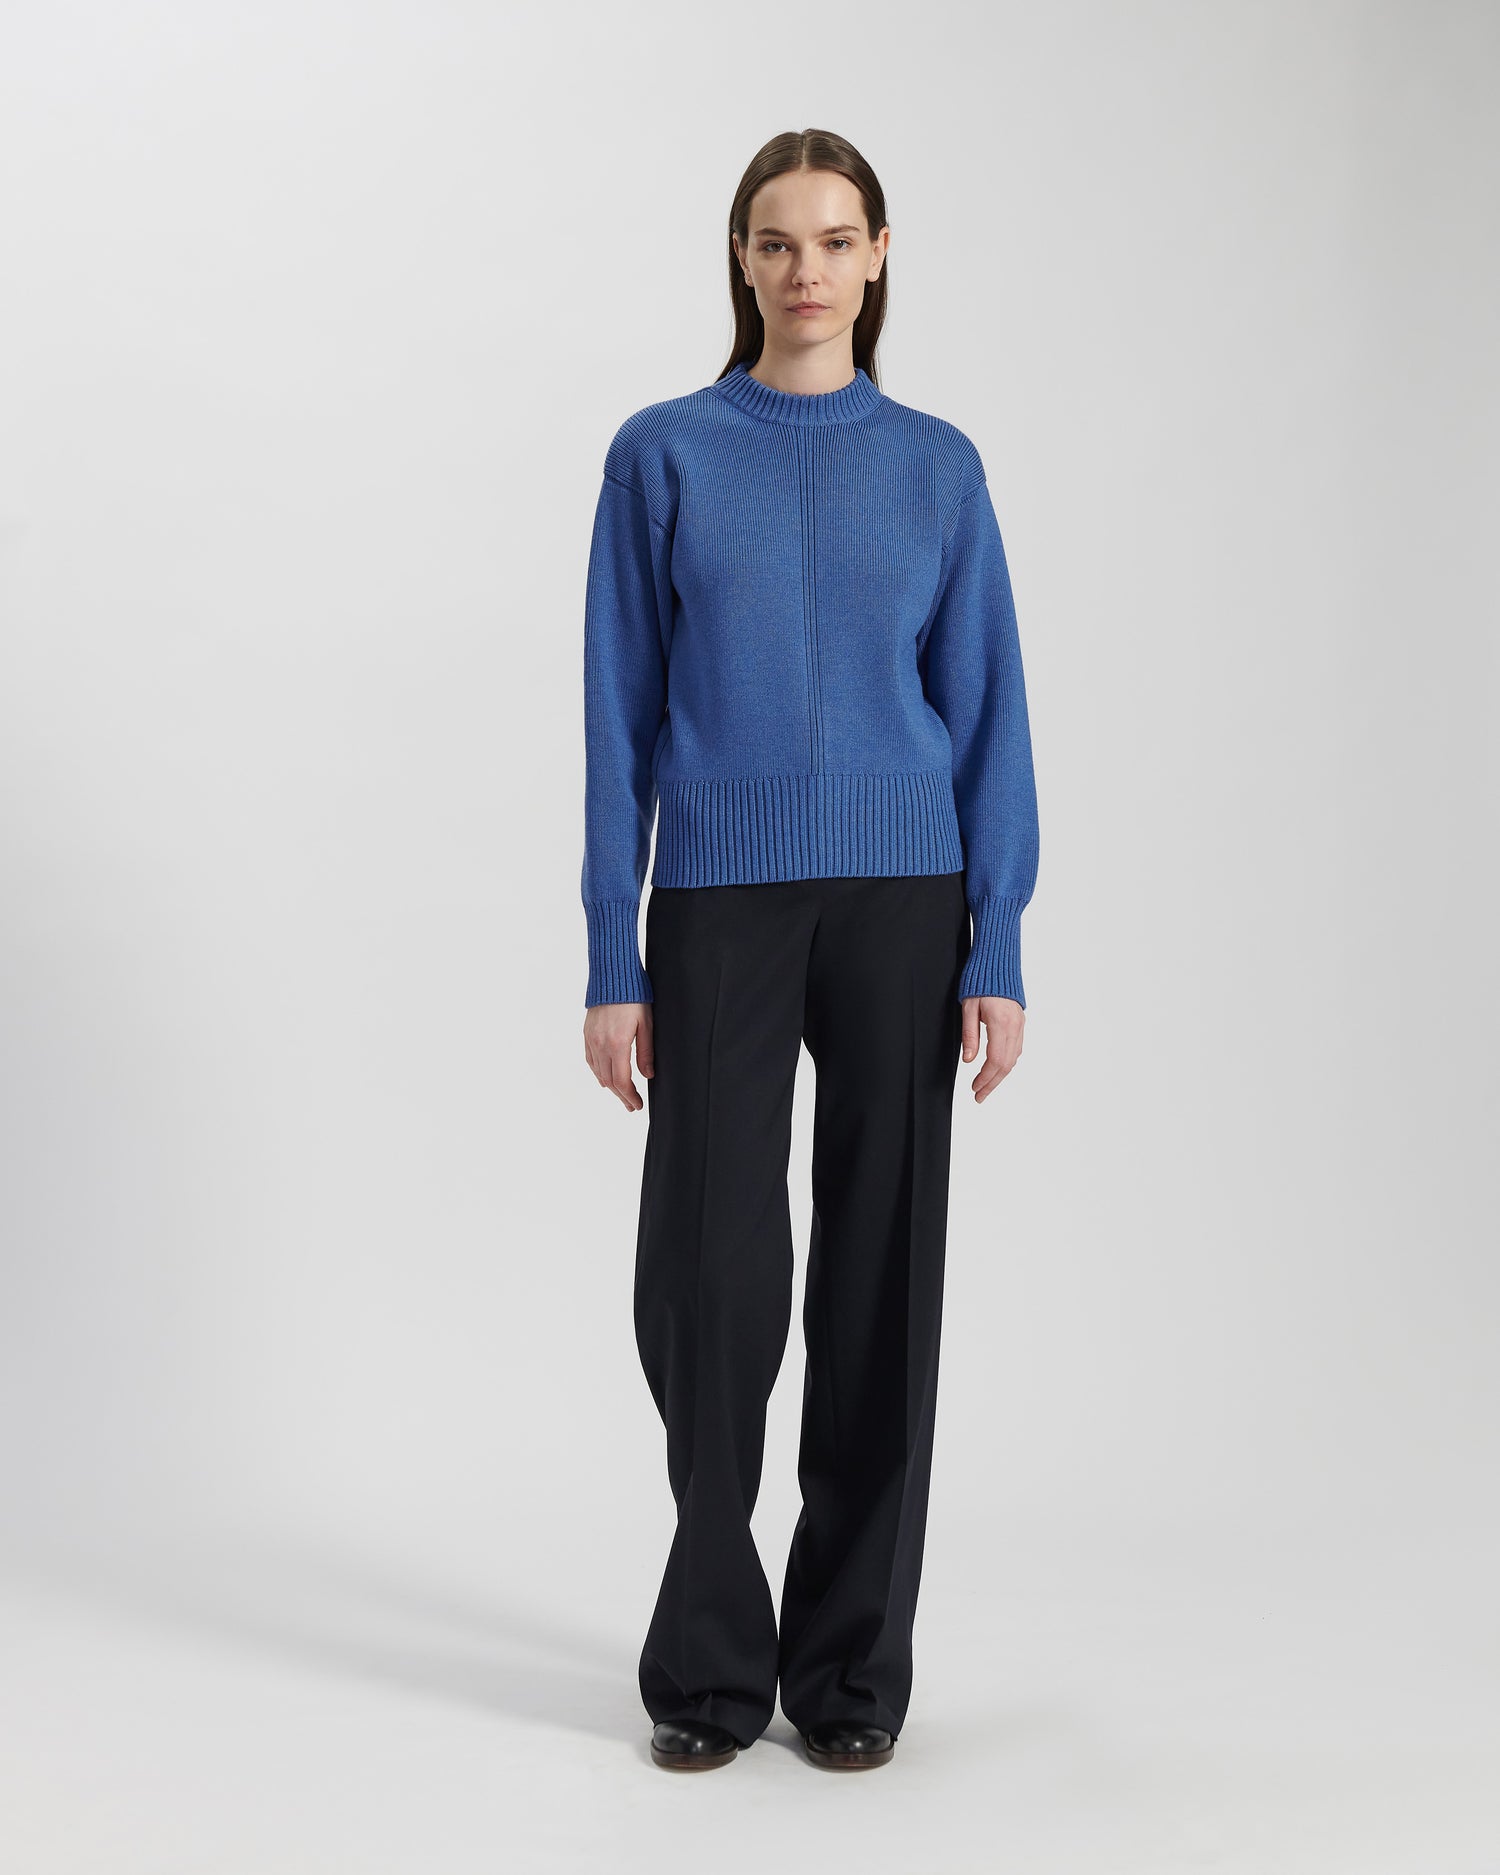 Valentina Sweater in Merino Wool, French Blue